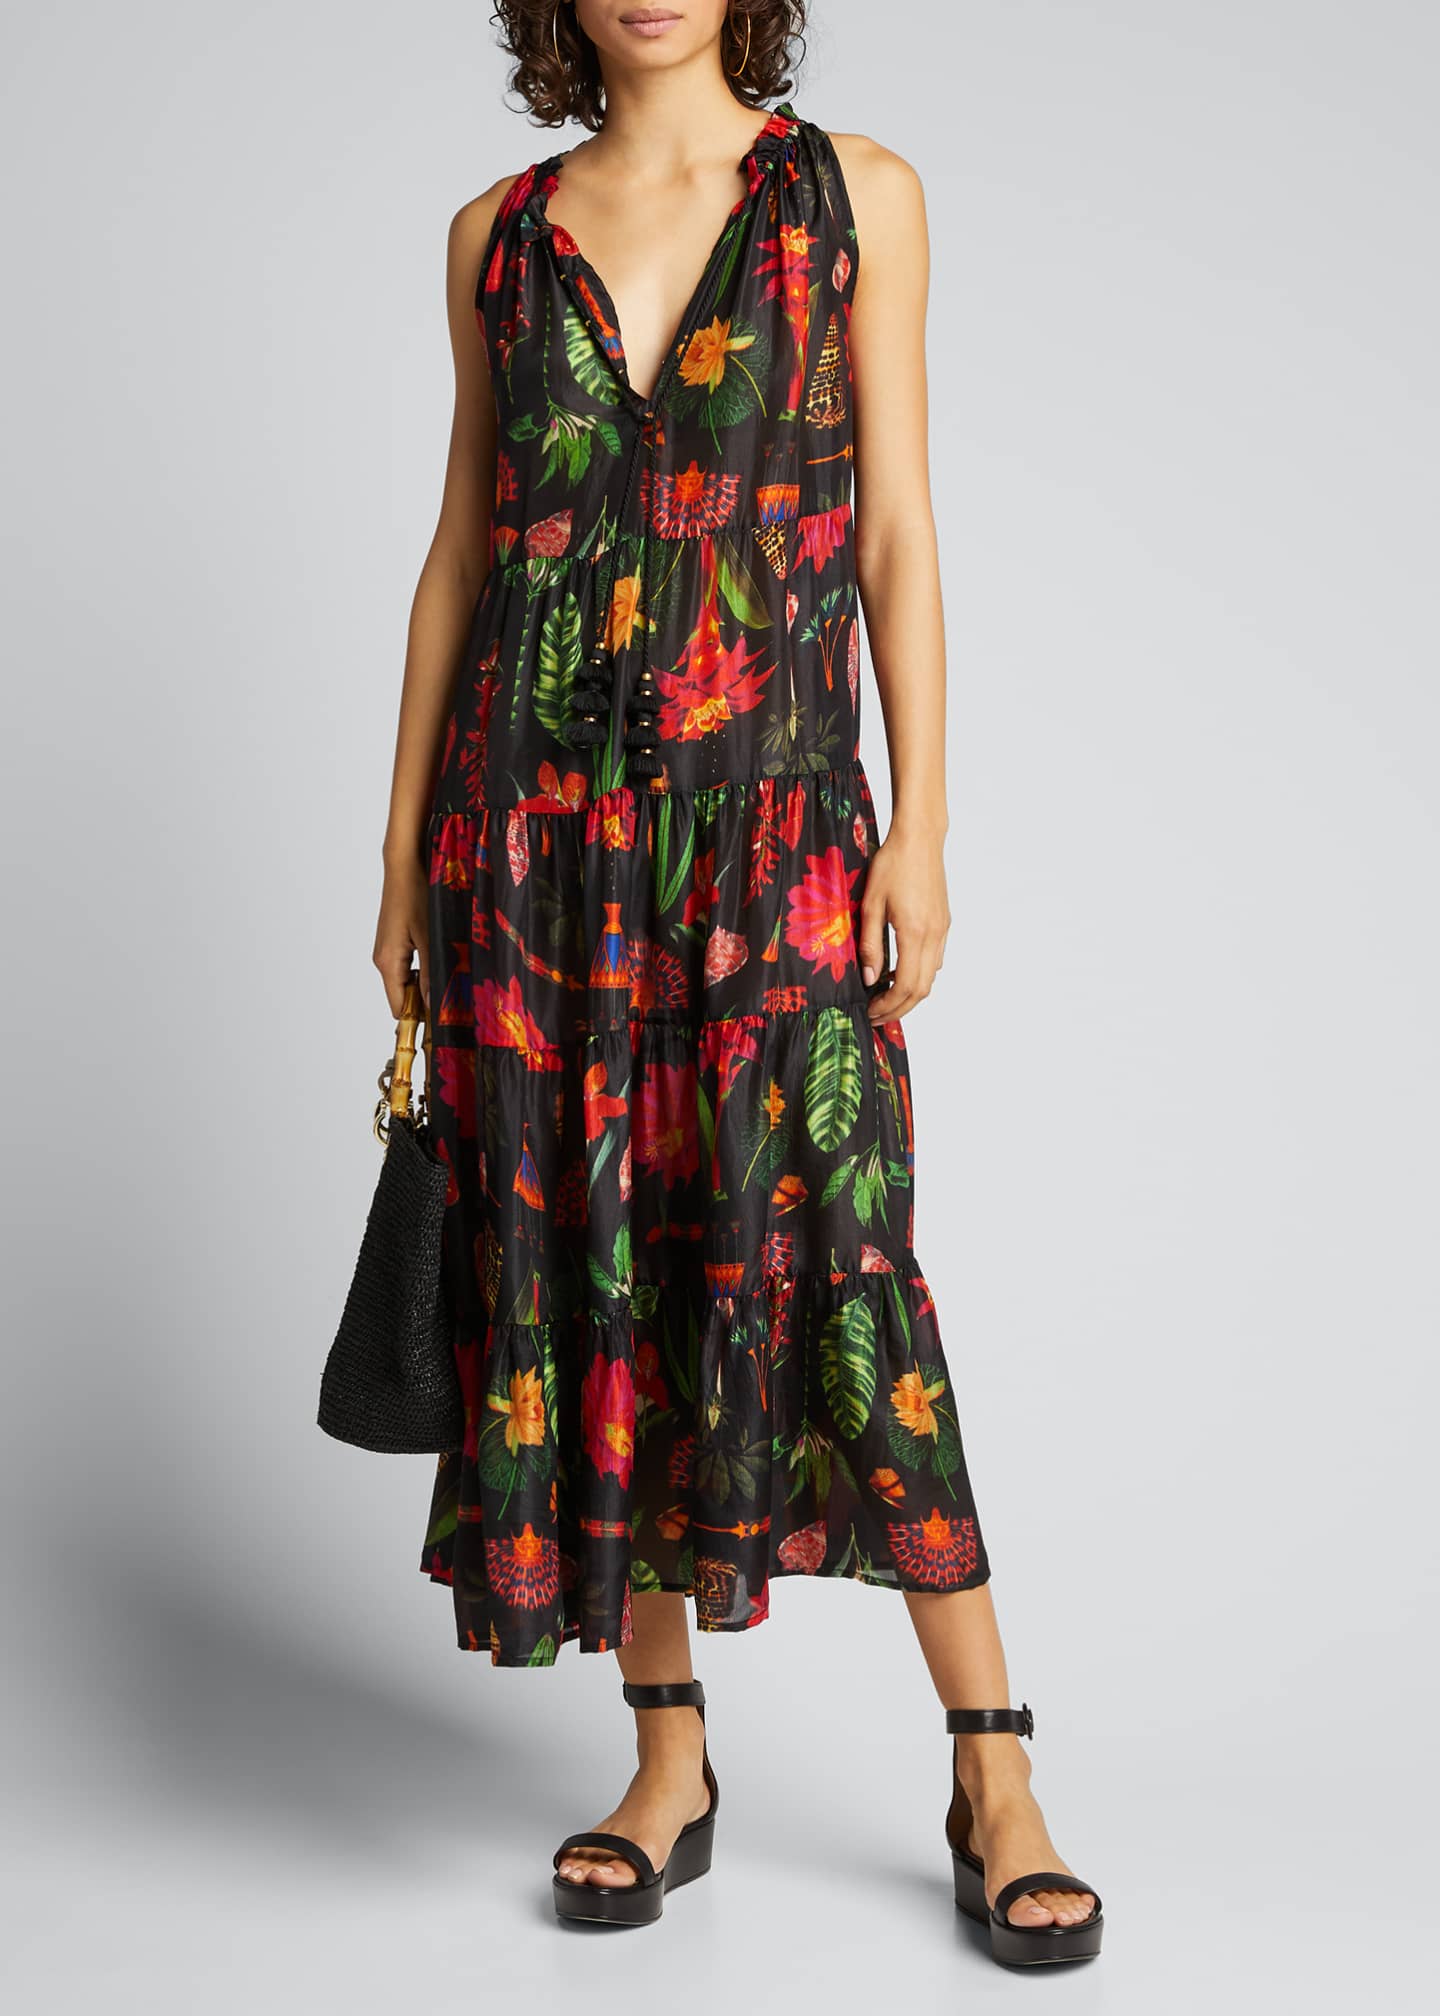 Carolina Herrera Dresses, Skirts & Blouses at Bergdorf Goodman